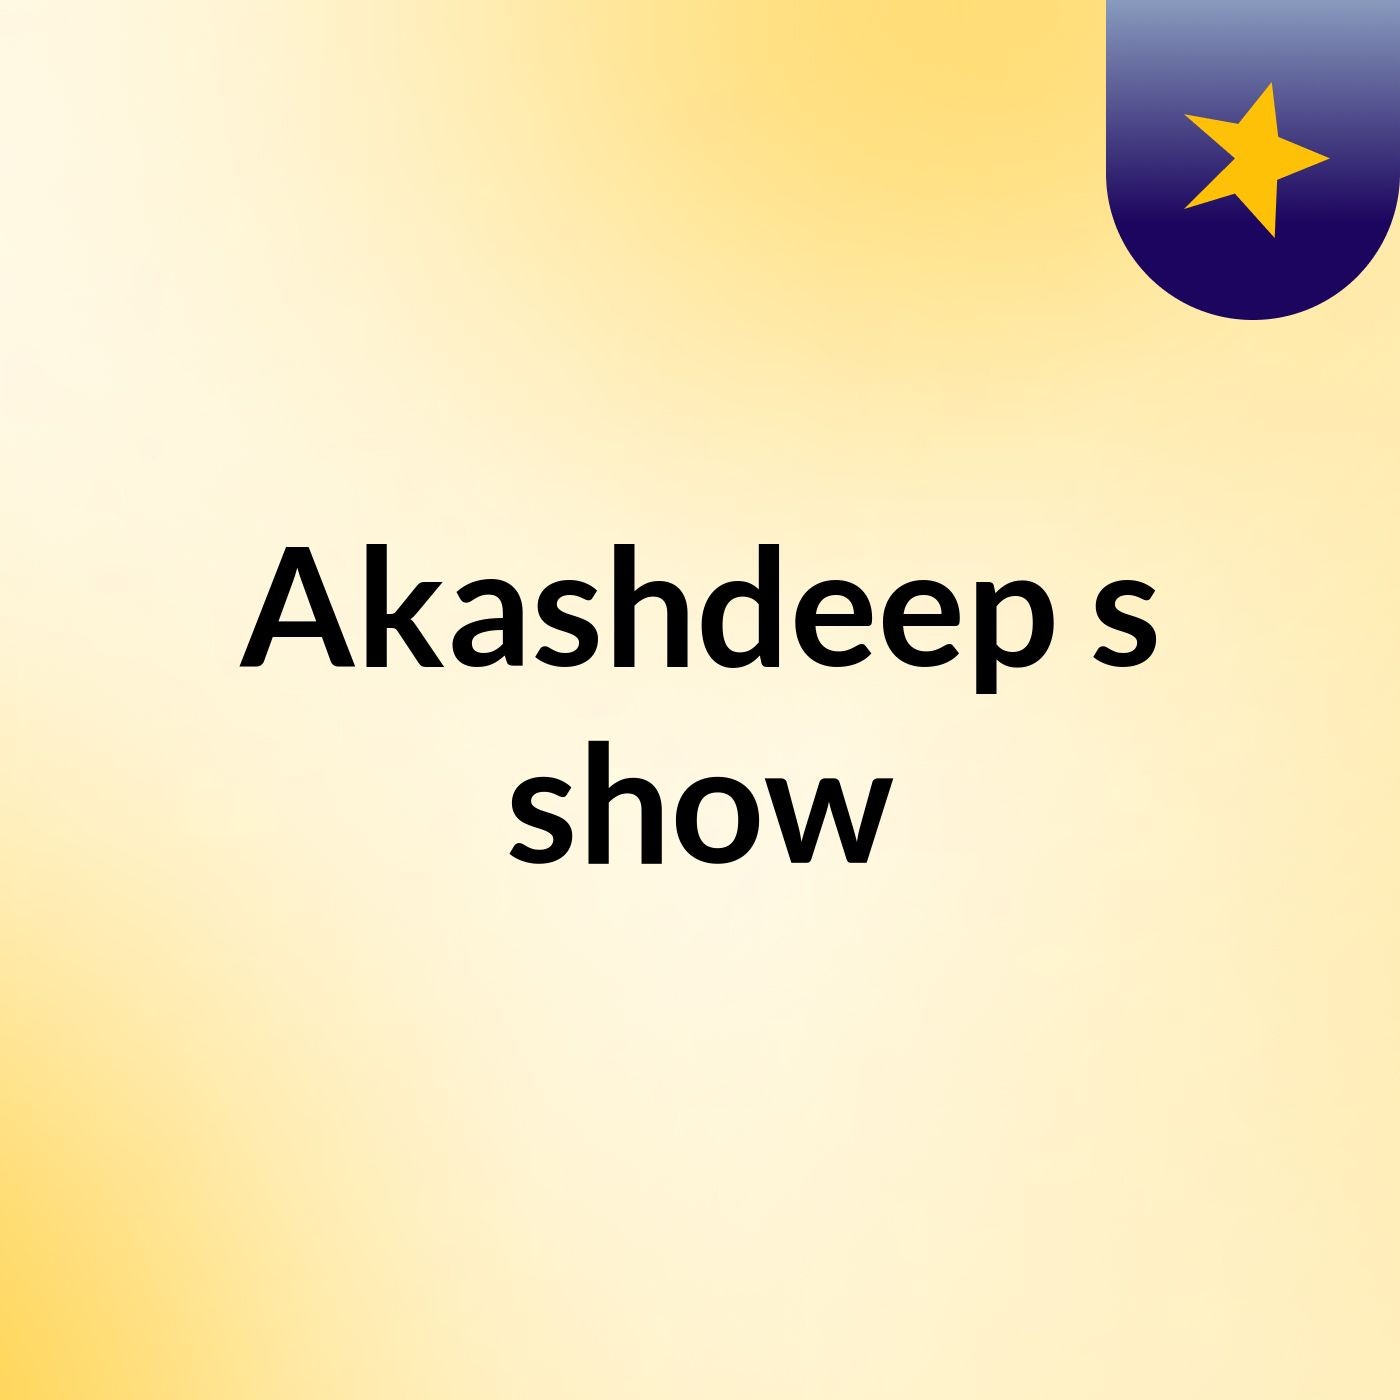 Akashdeep's show